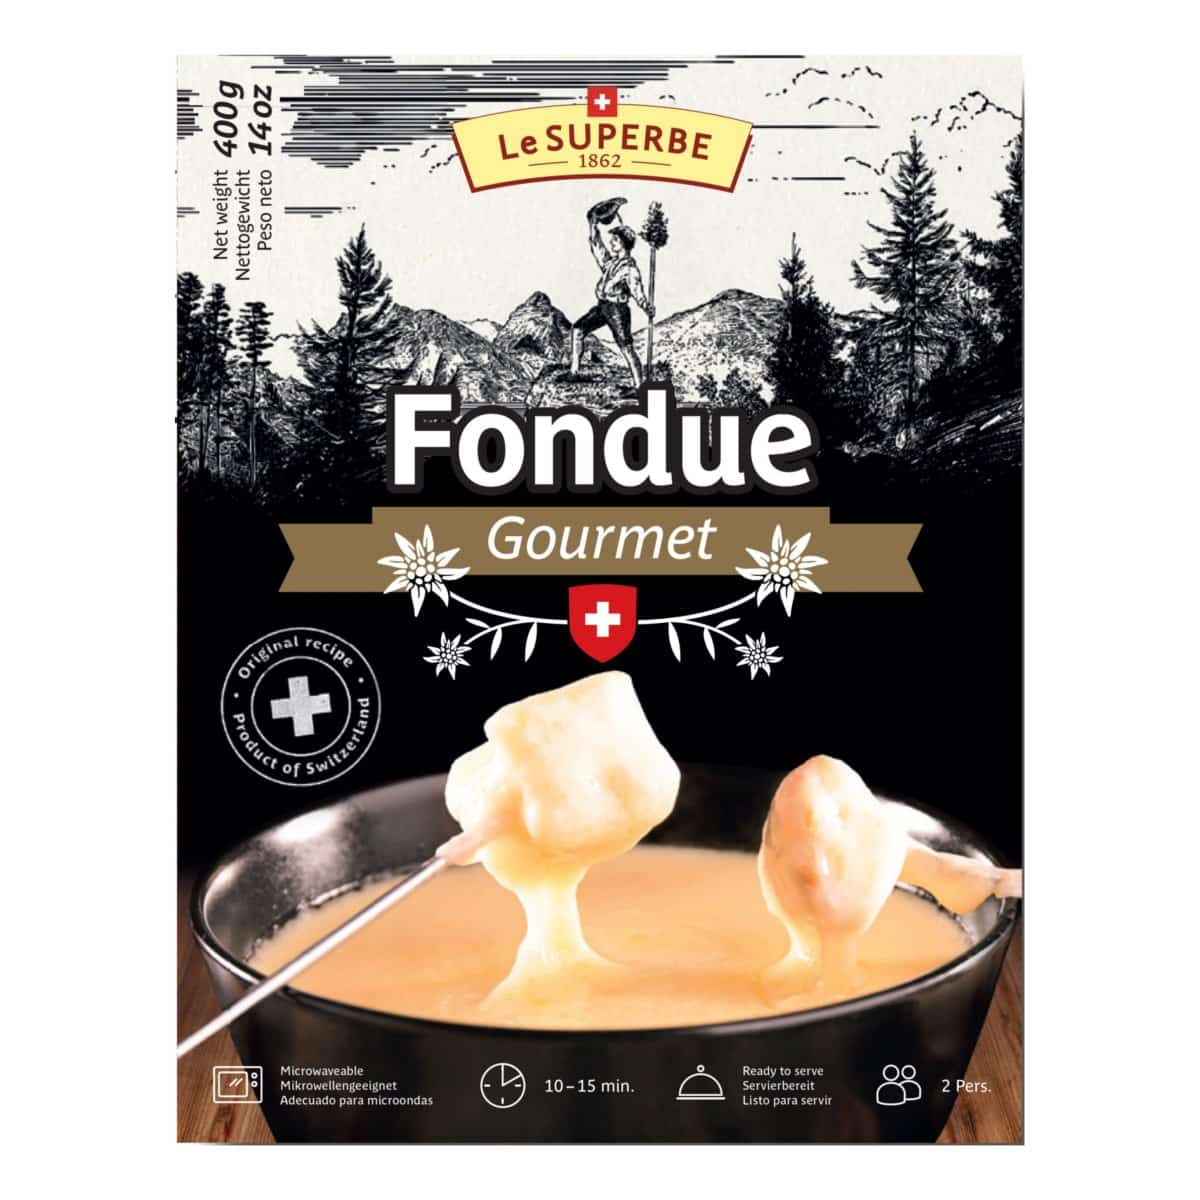 La Fondue: Dipping into updated La Fondue – The Mercury News